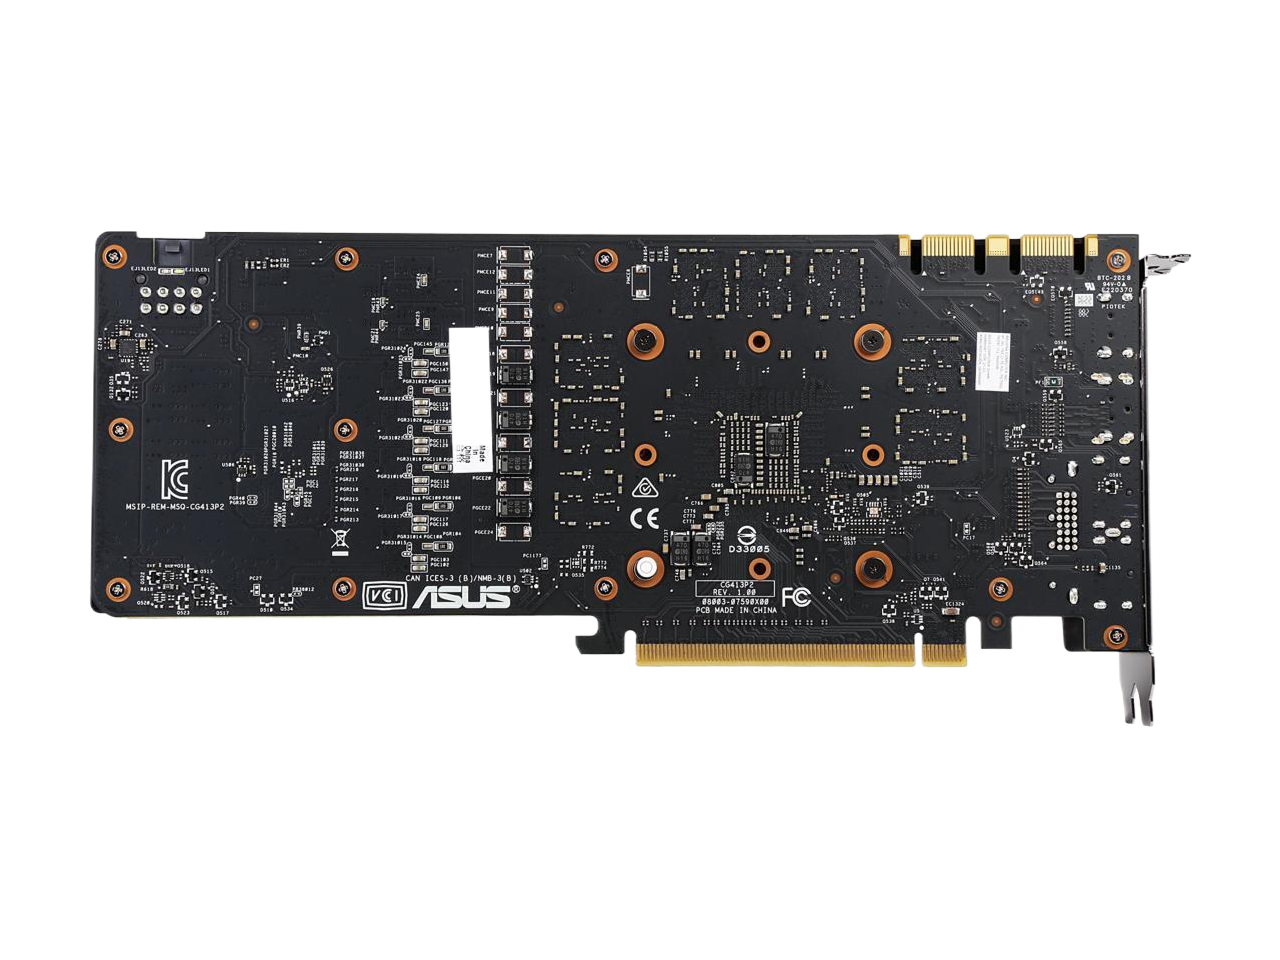 ASUS Turbo GeForce GTX 1060 6GB GDDR5 PCI Express 3.0 Video Card TURBO-GTX1060-6G